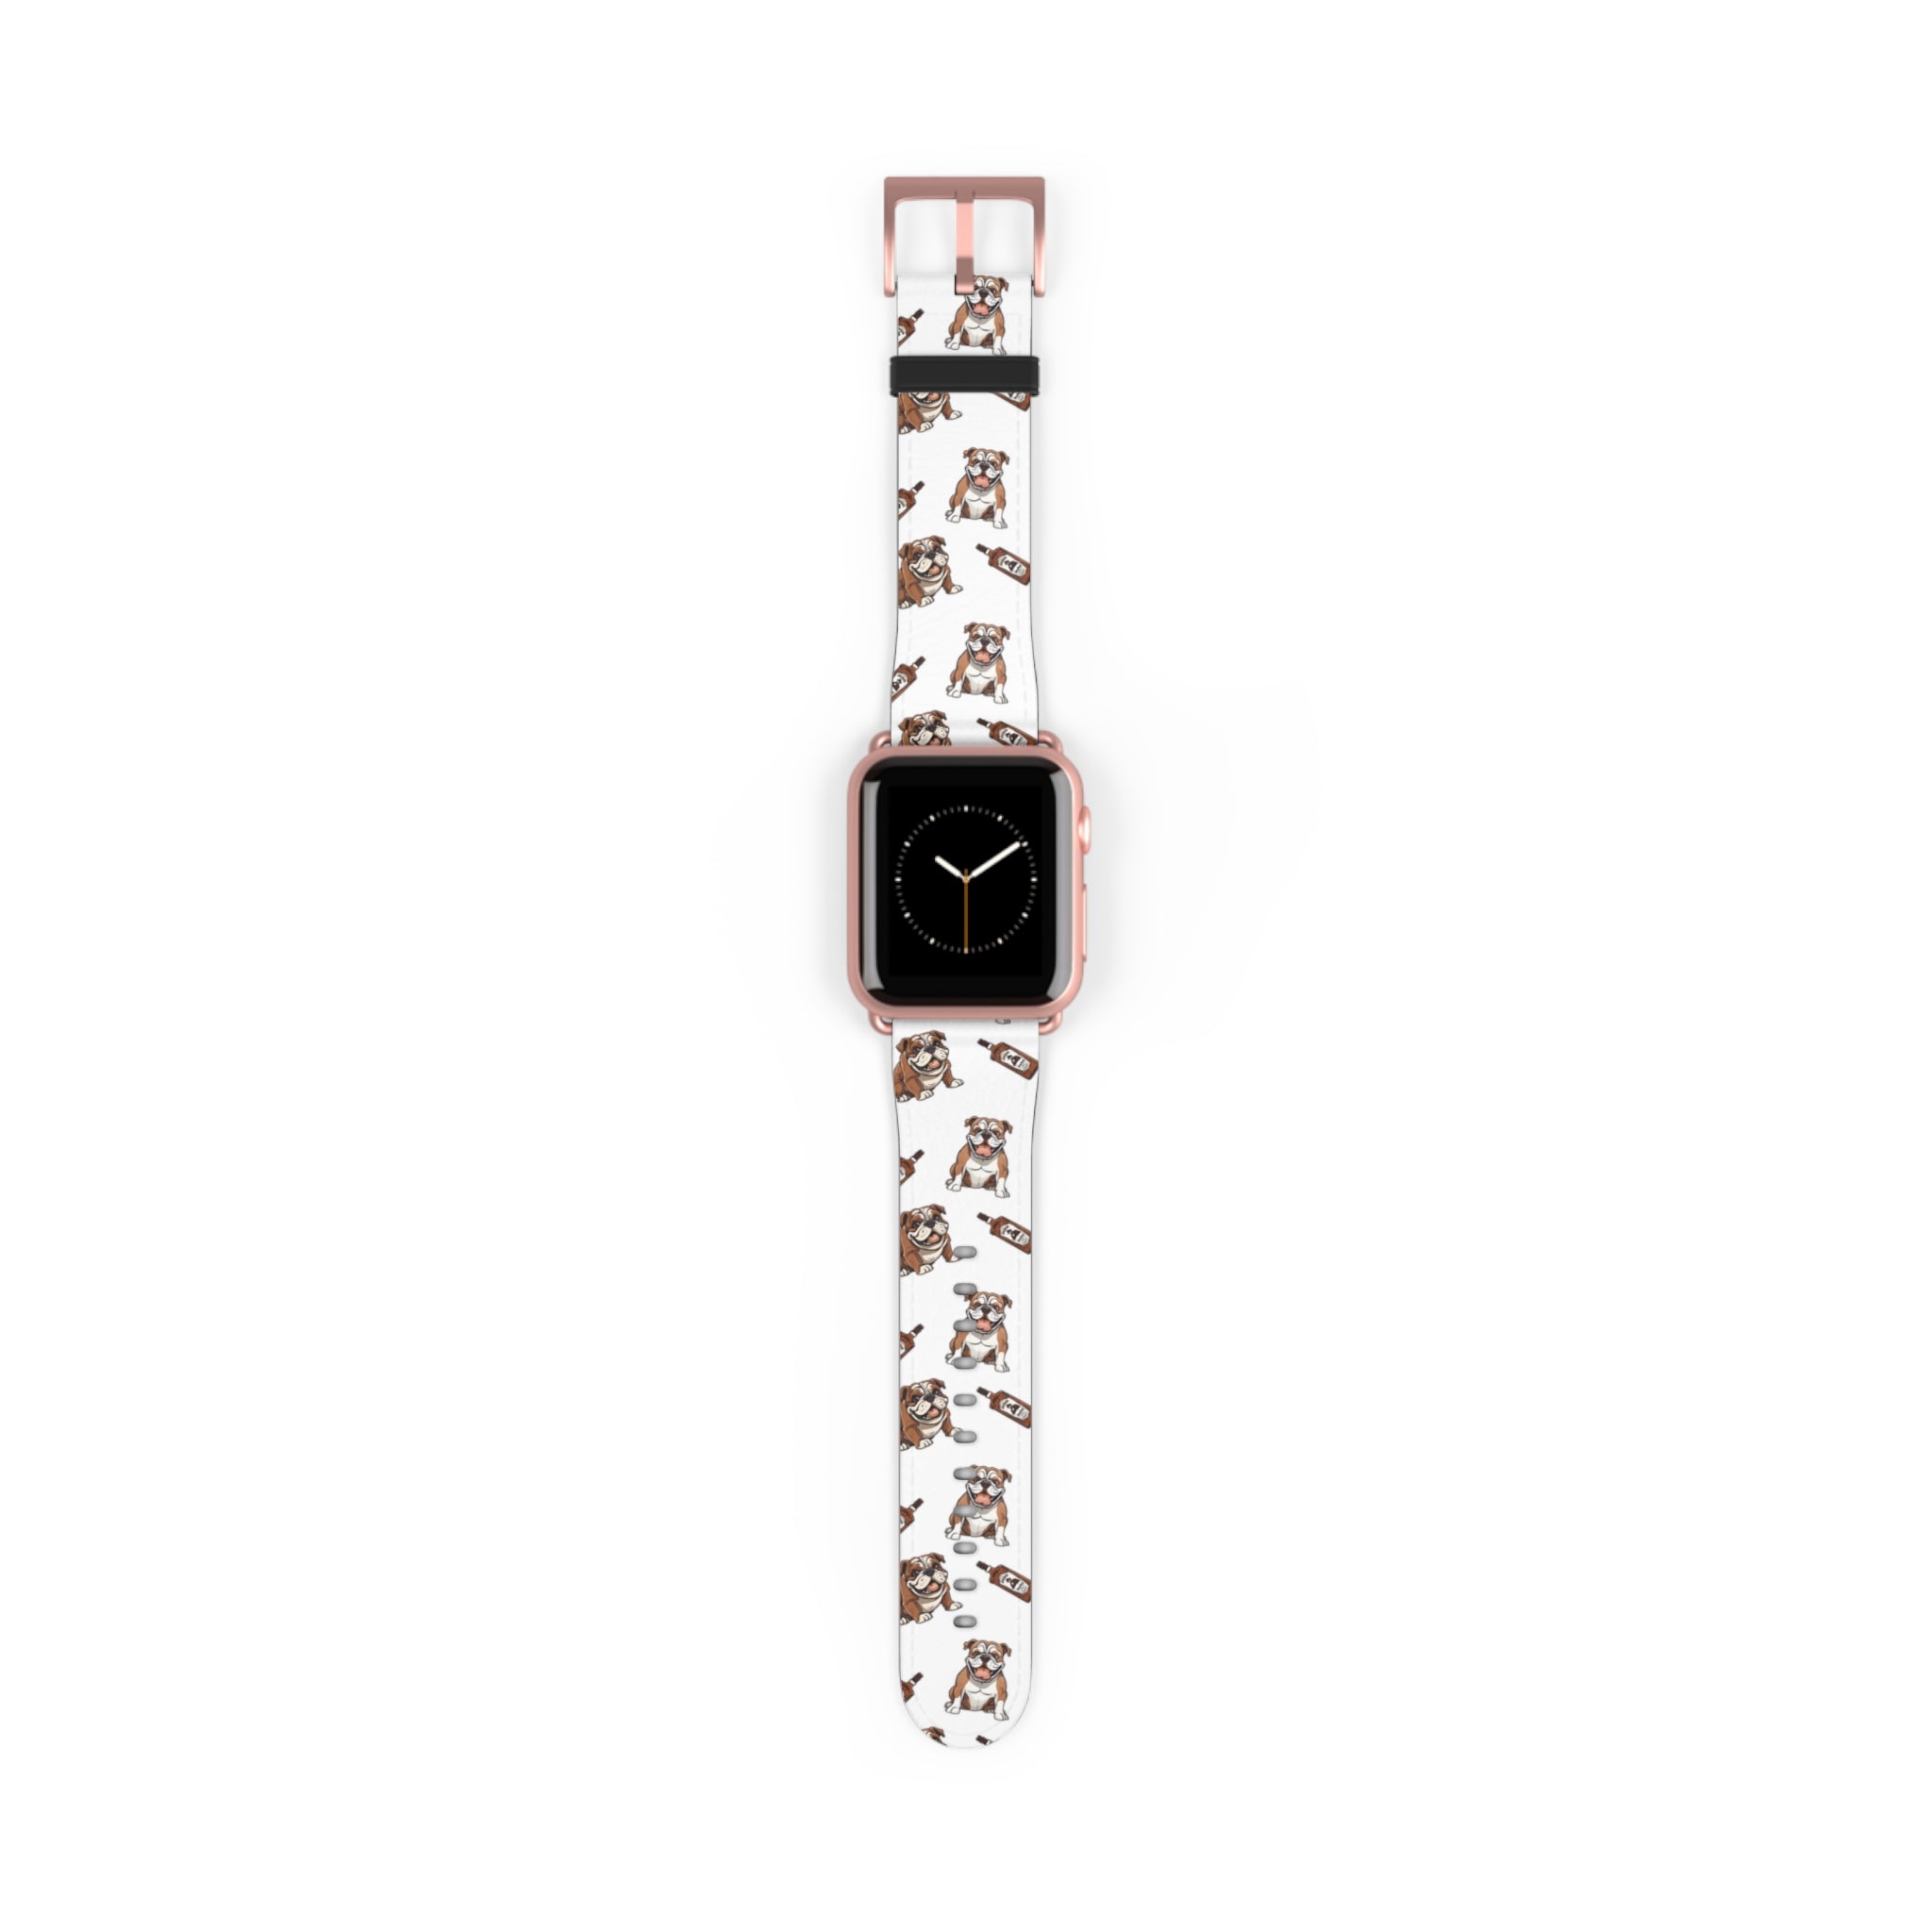 Bulldog Apple Watch Bands (English/Bourbon)